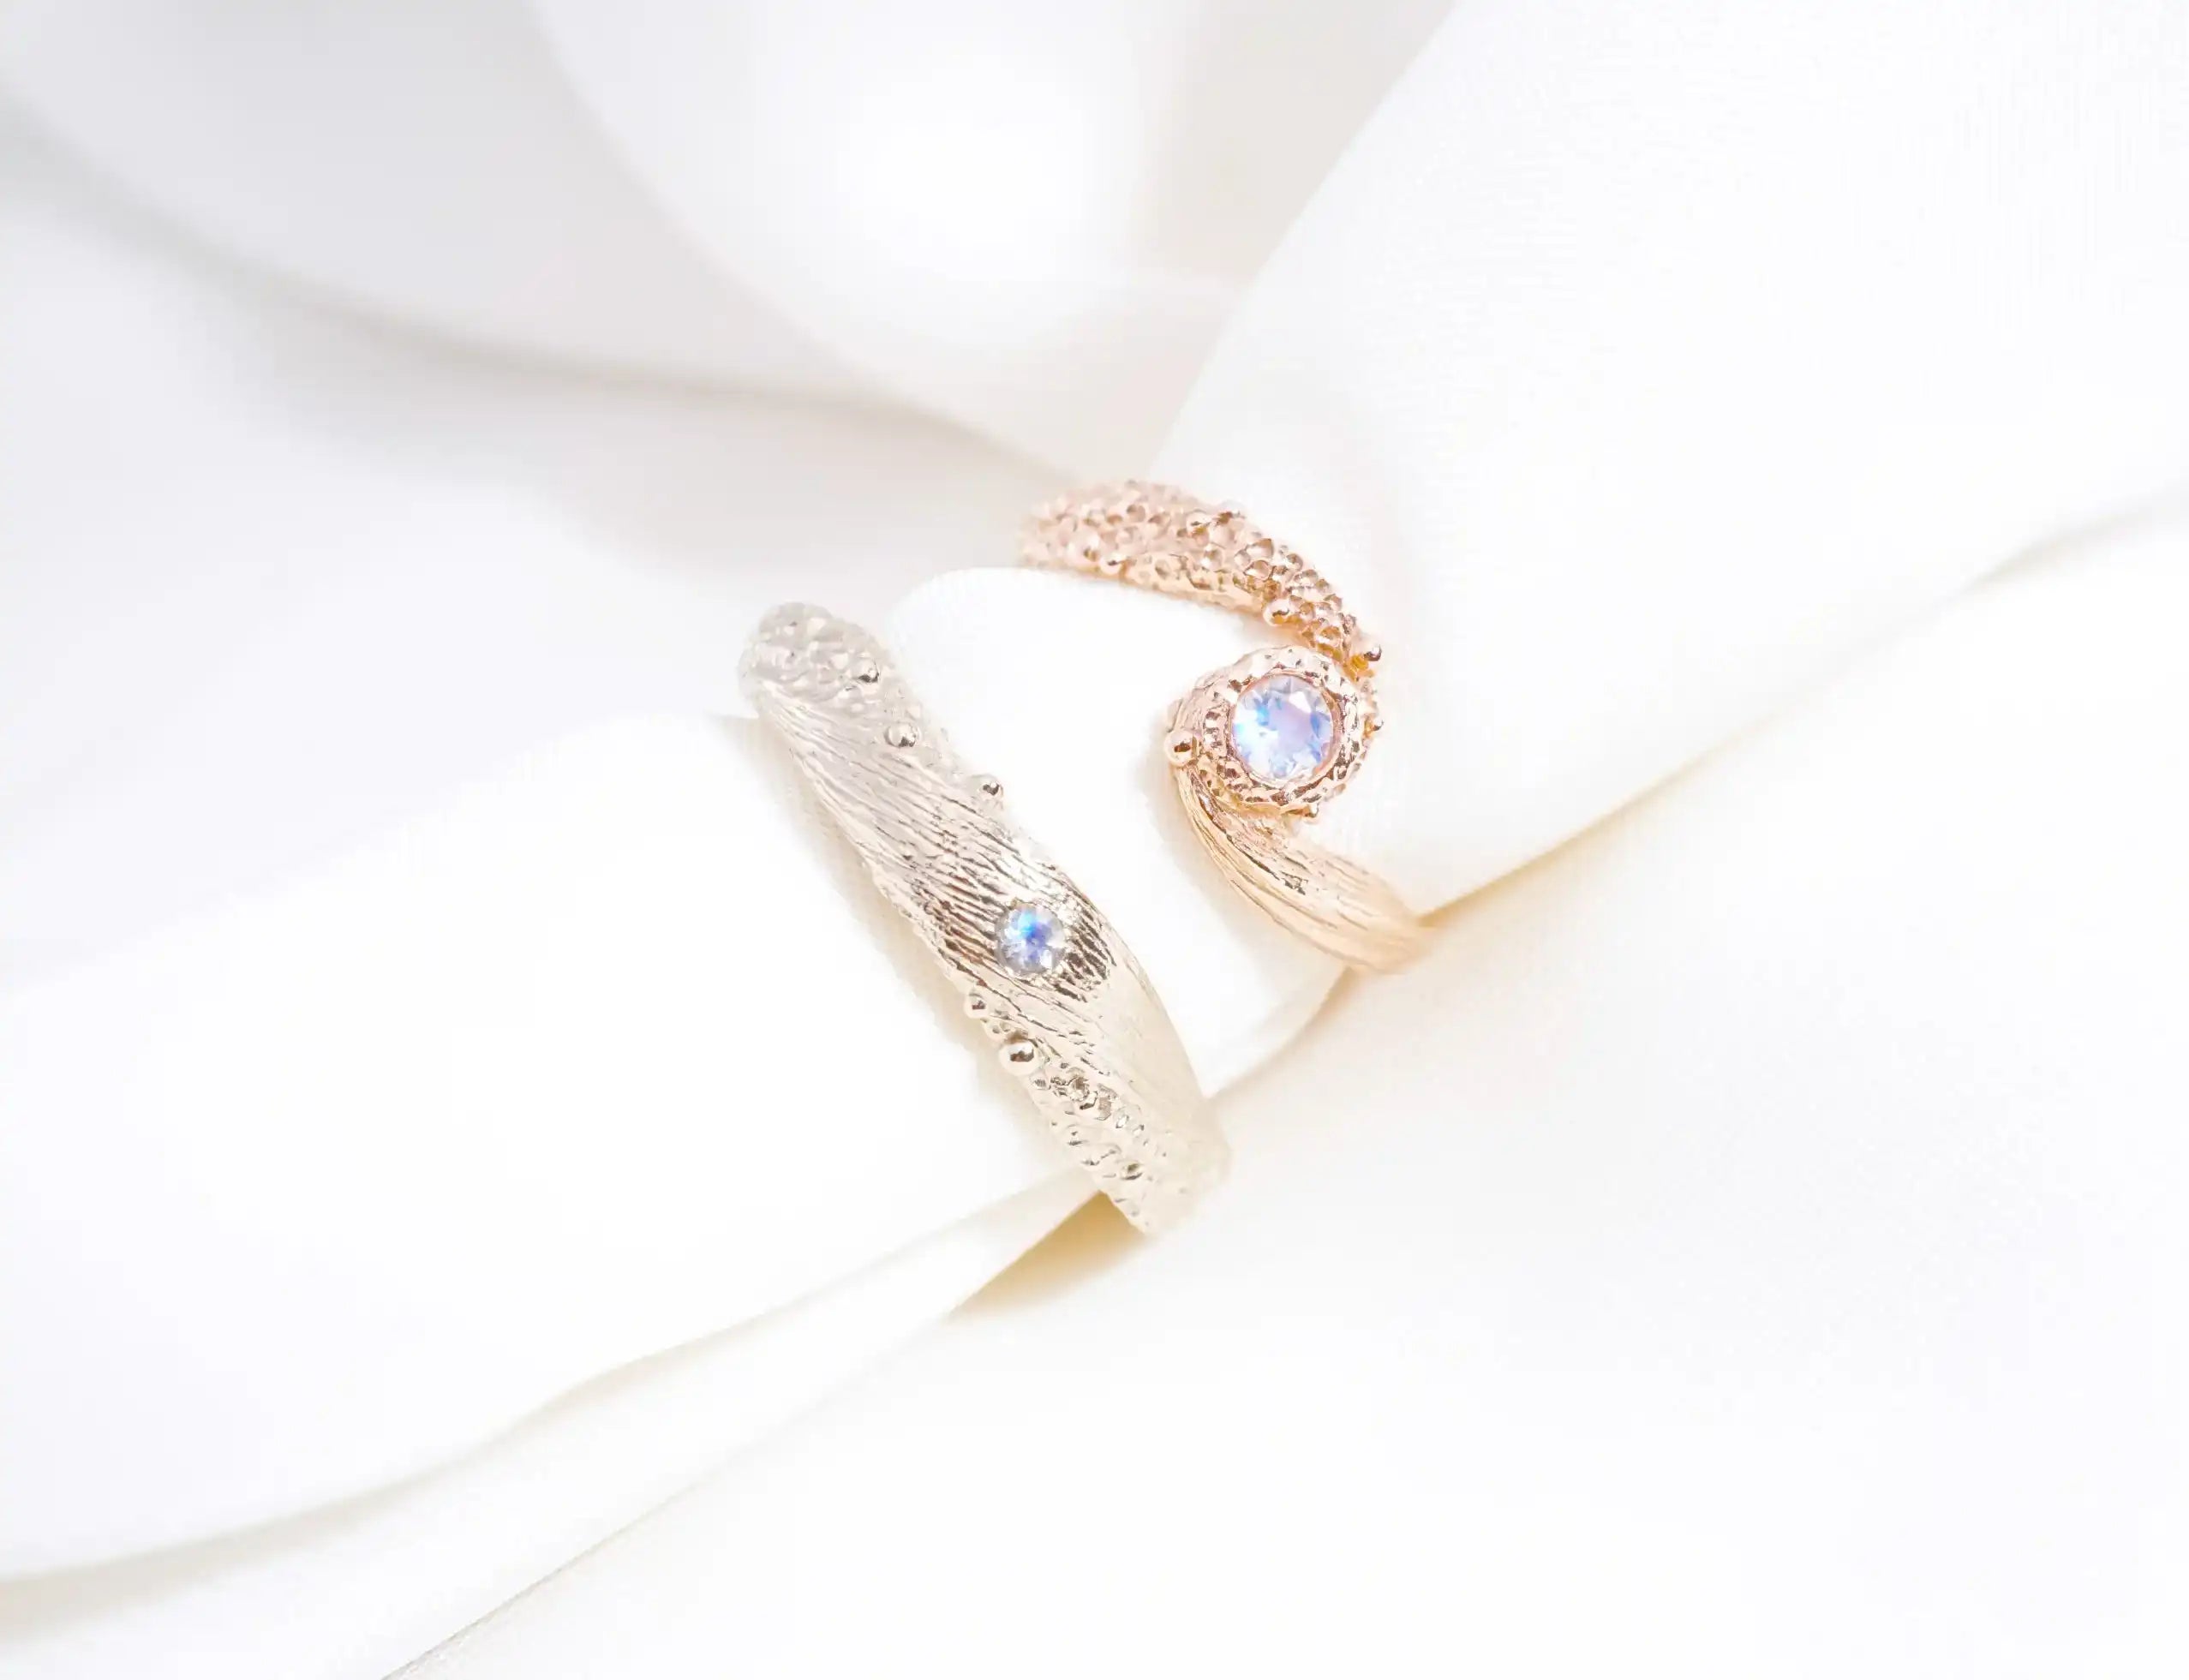 portfolio of Chia Jewelry unique bespoke wedding rings and wedding bands